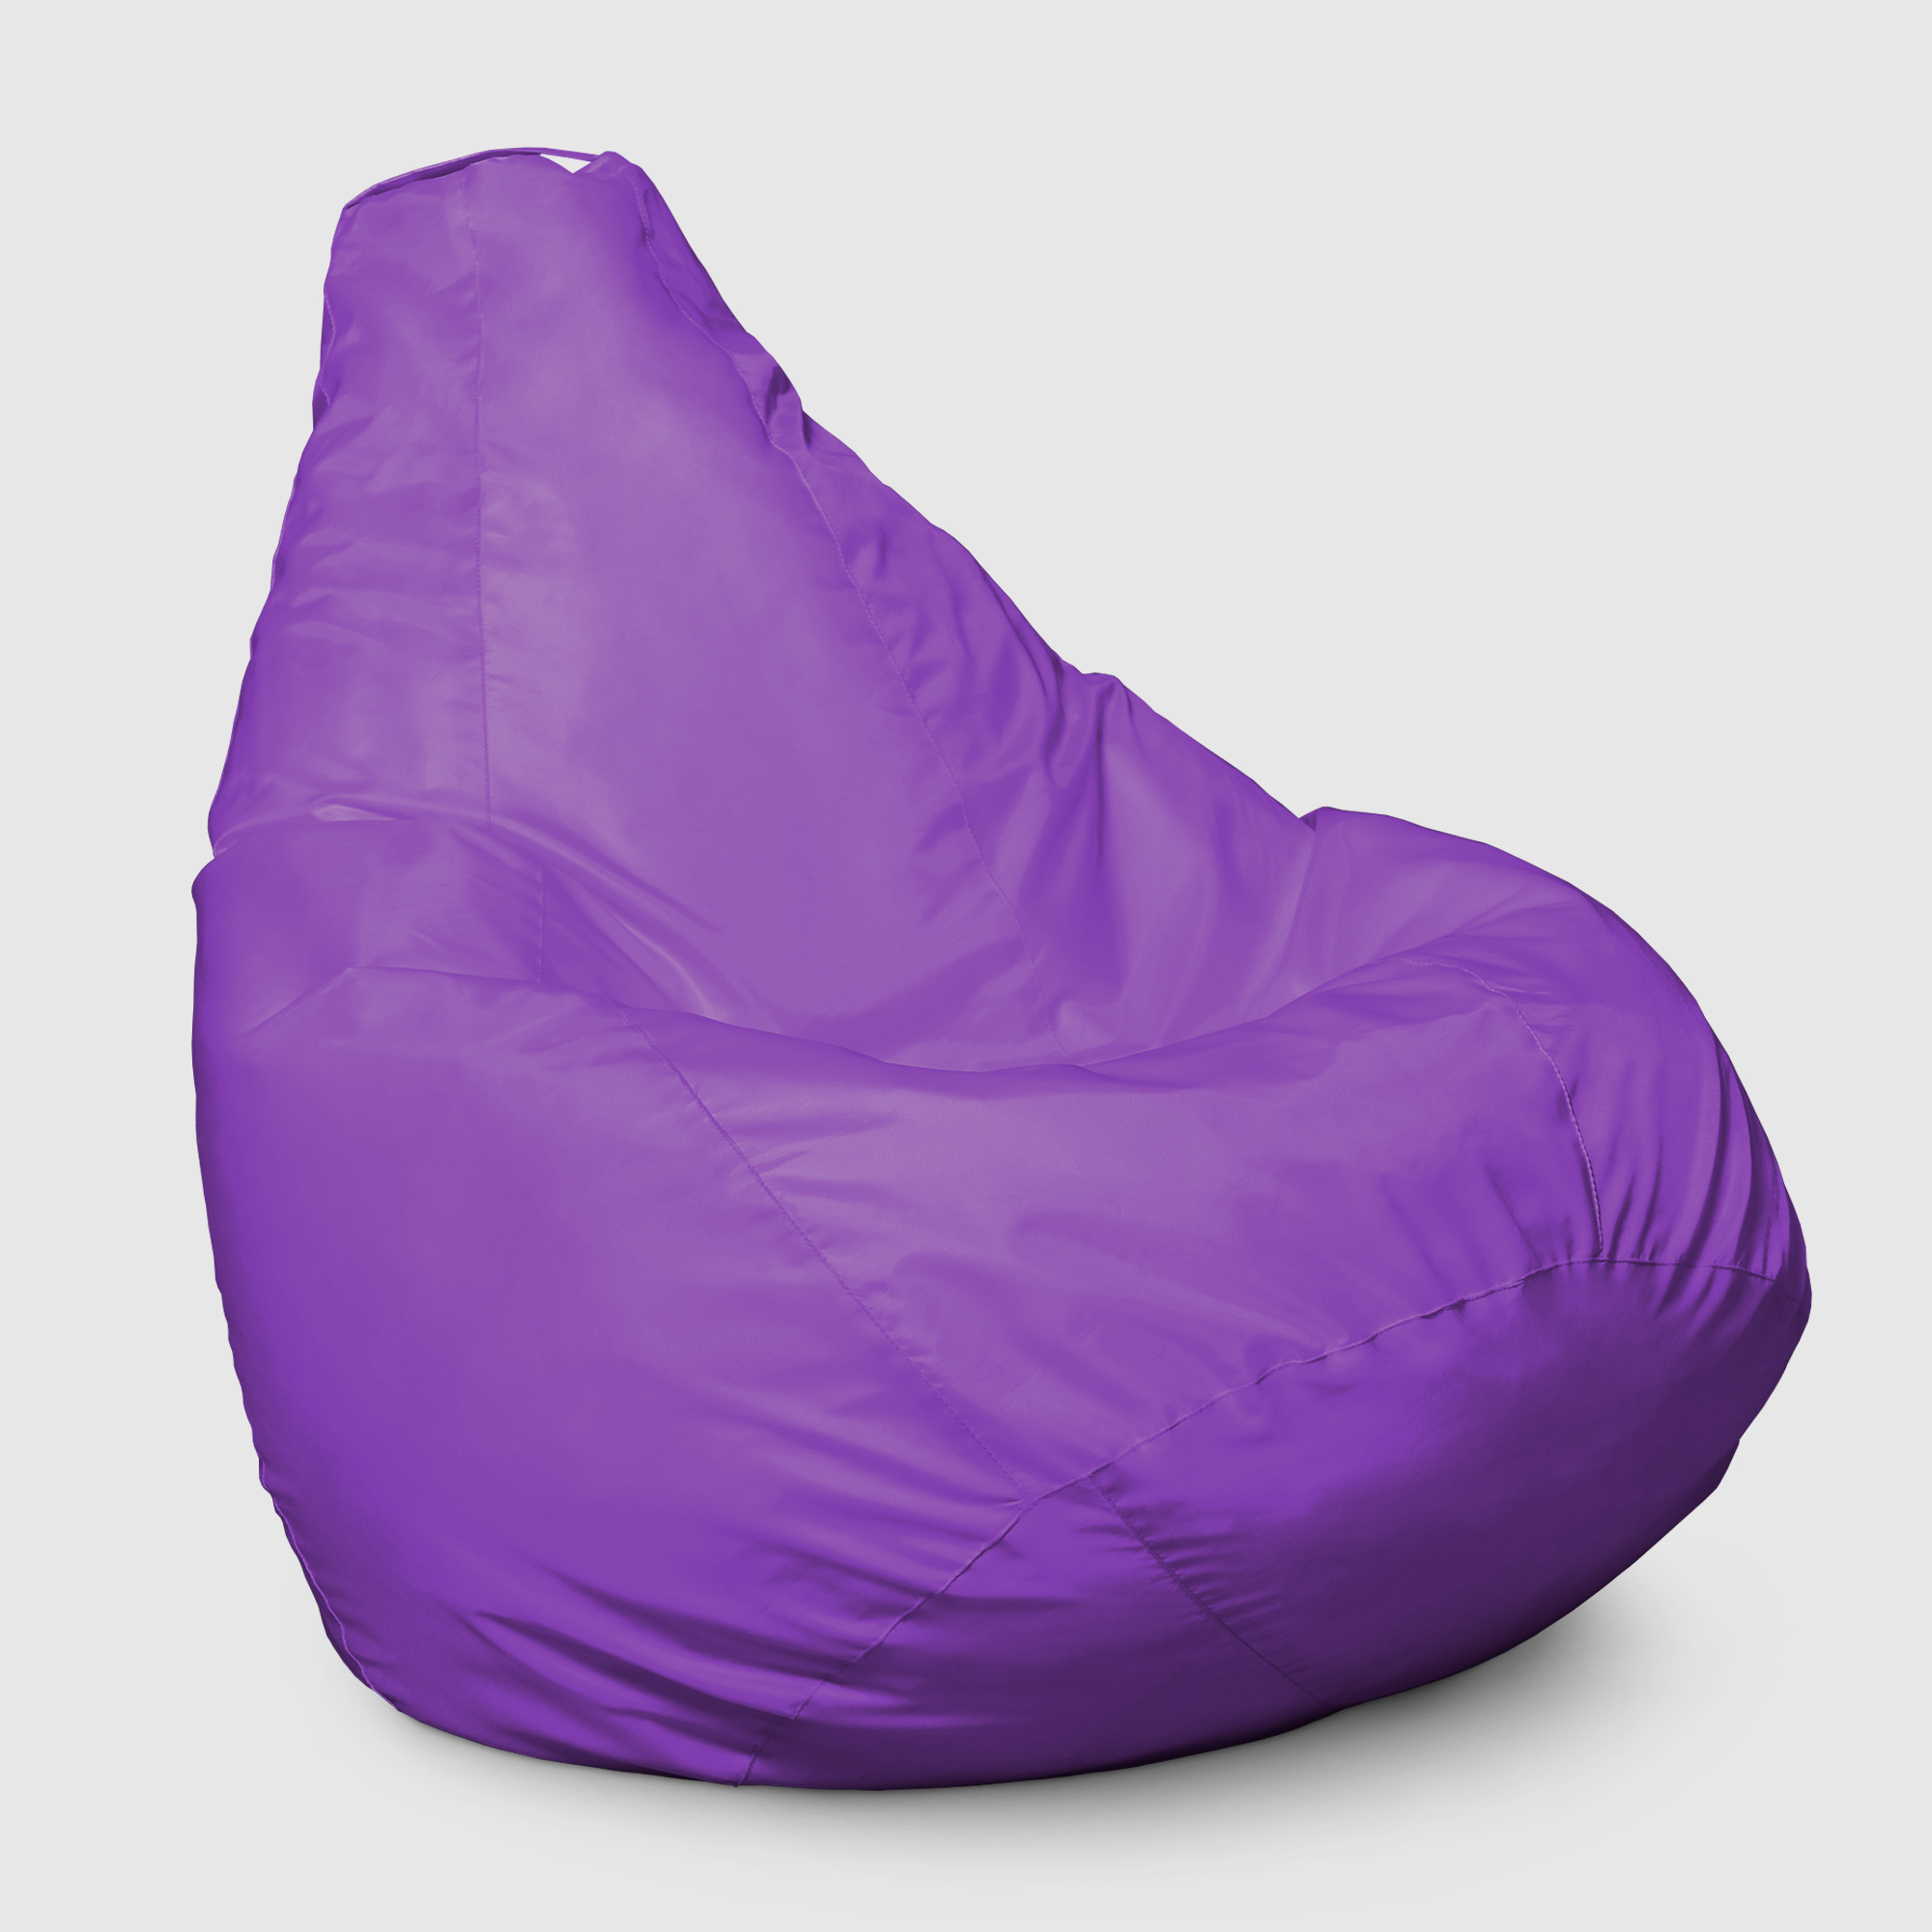 Кресло мешок Dreambag Меган xl фиолетовое 85х85х125 см кресло мешок dreambag меган xl белое 85х85х125см